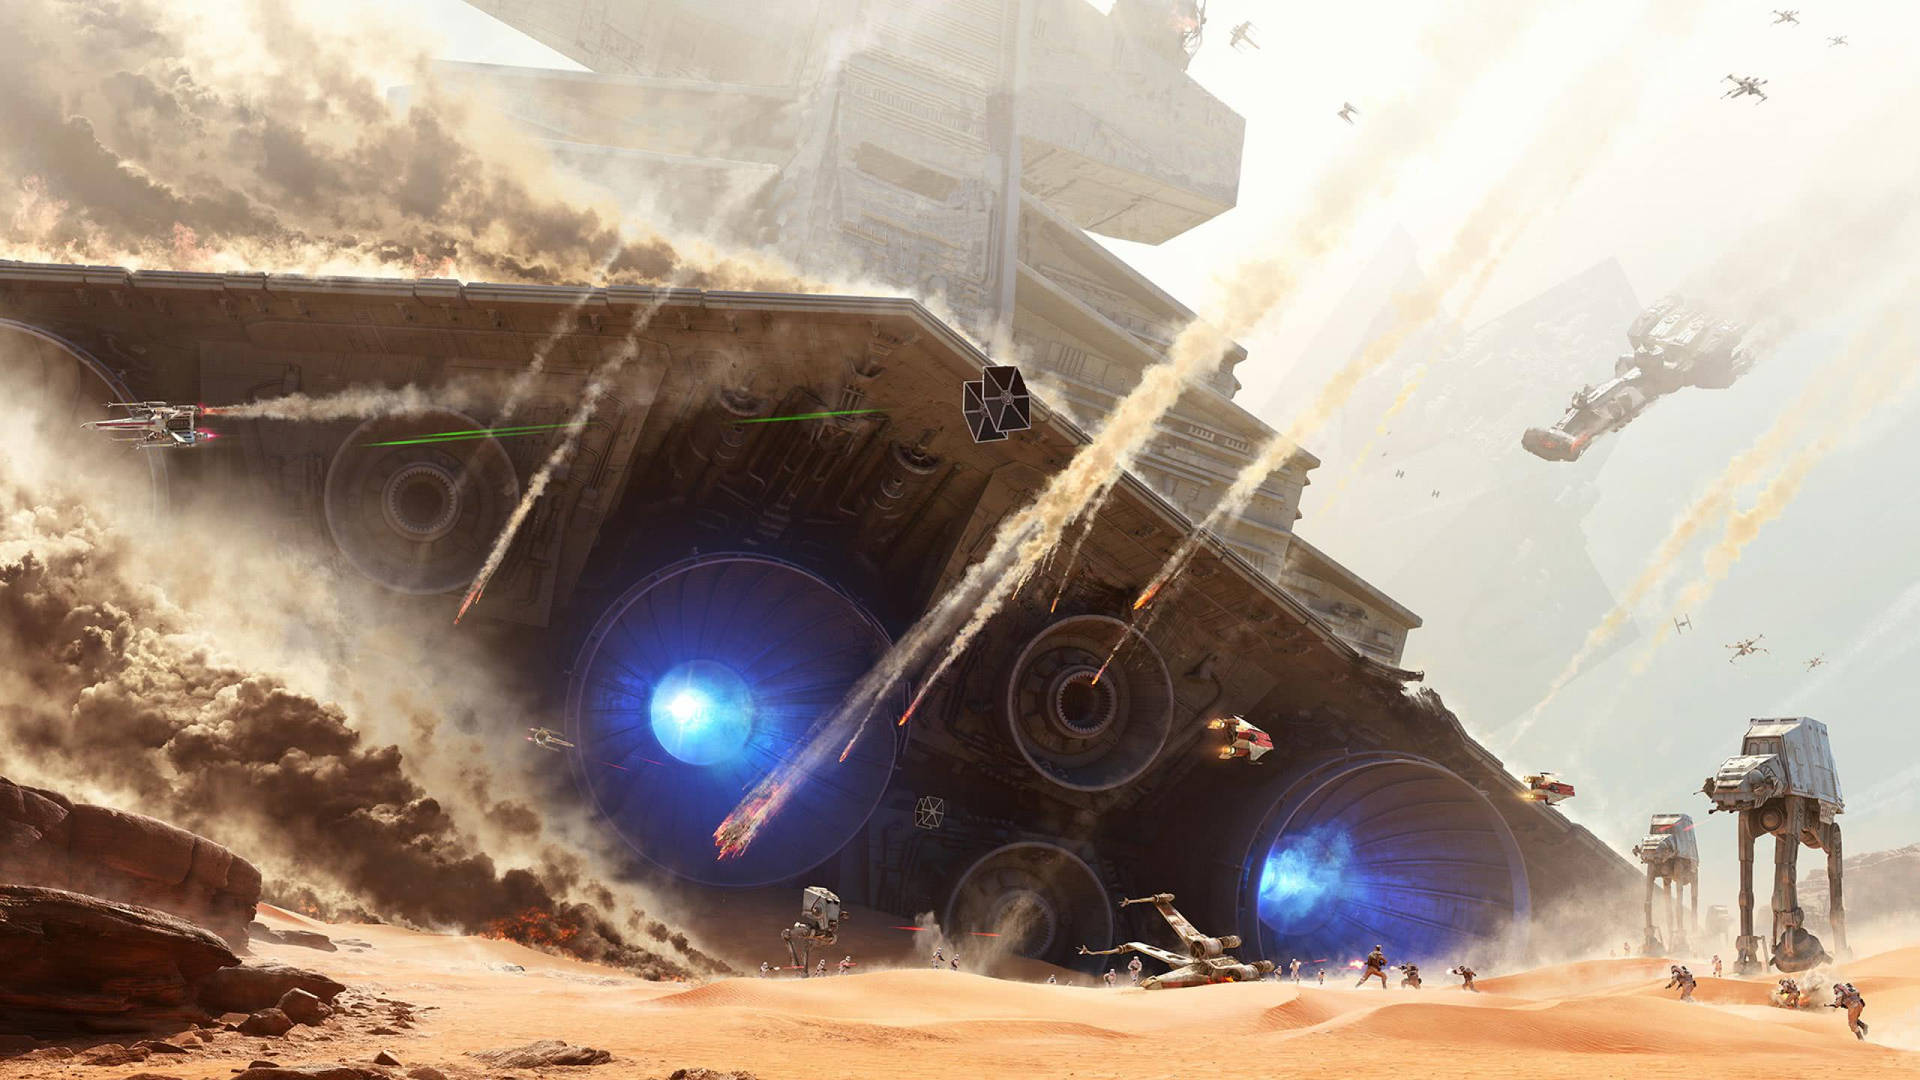 Prepare for thrilling battles in Star Wars: Battlefront Wallpaper